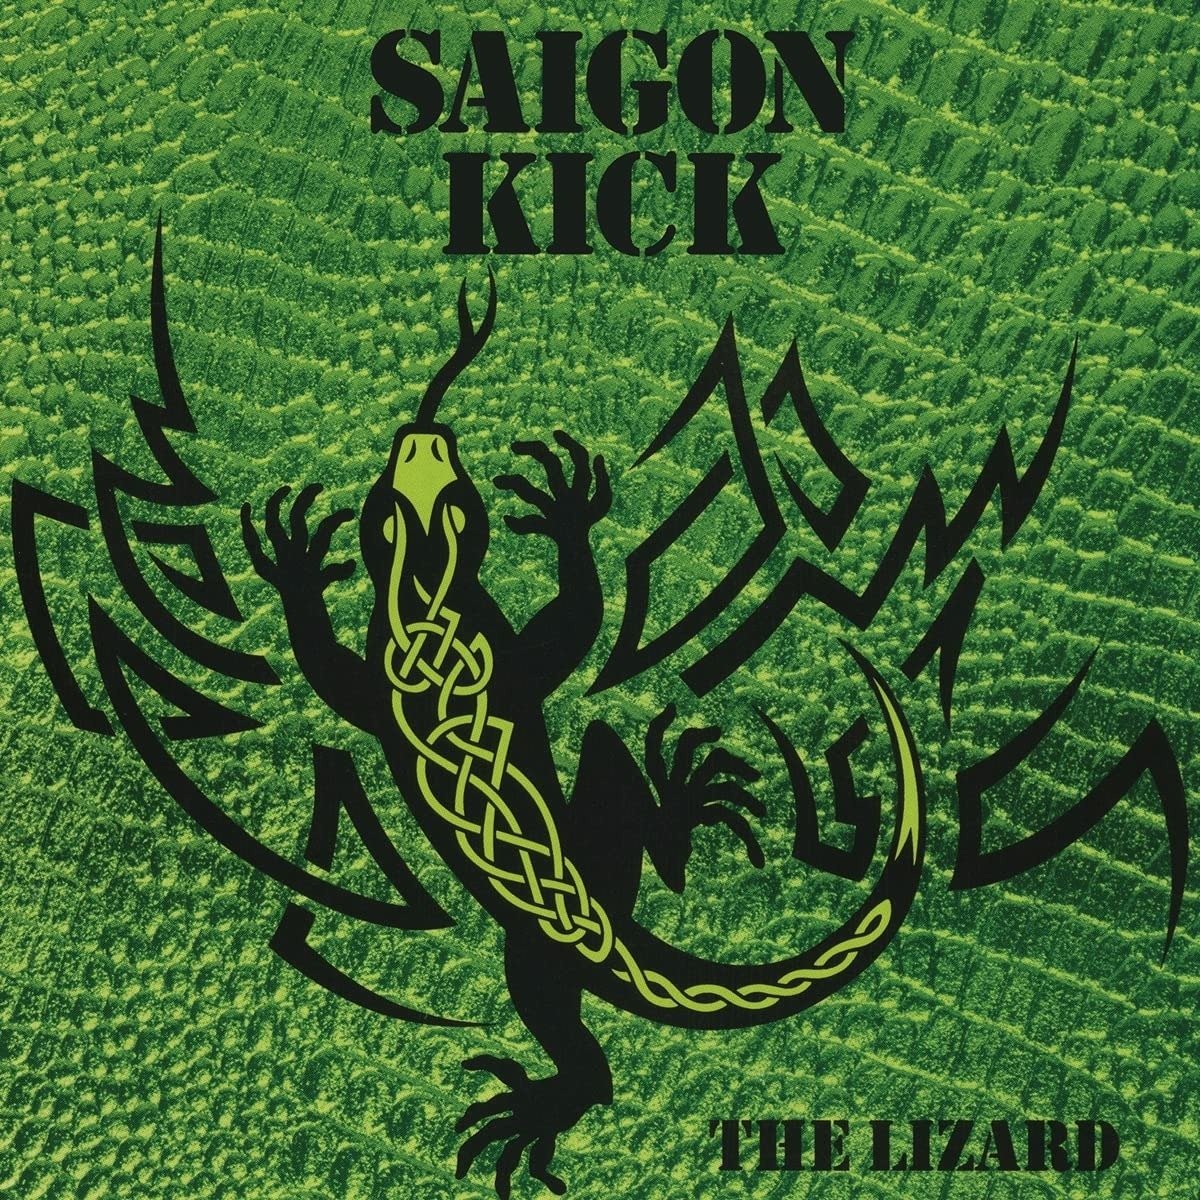 CD Shop - SAIGON KICK LIZARD